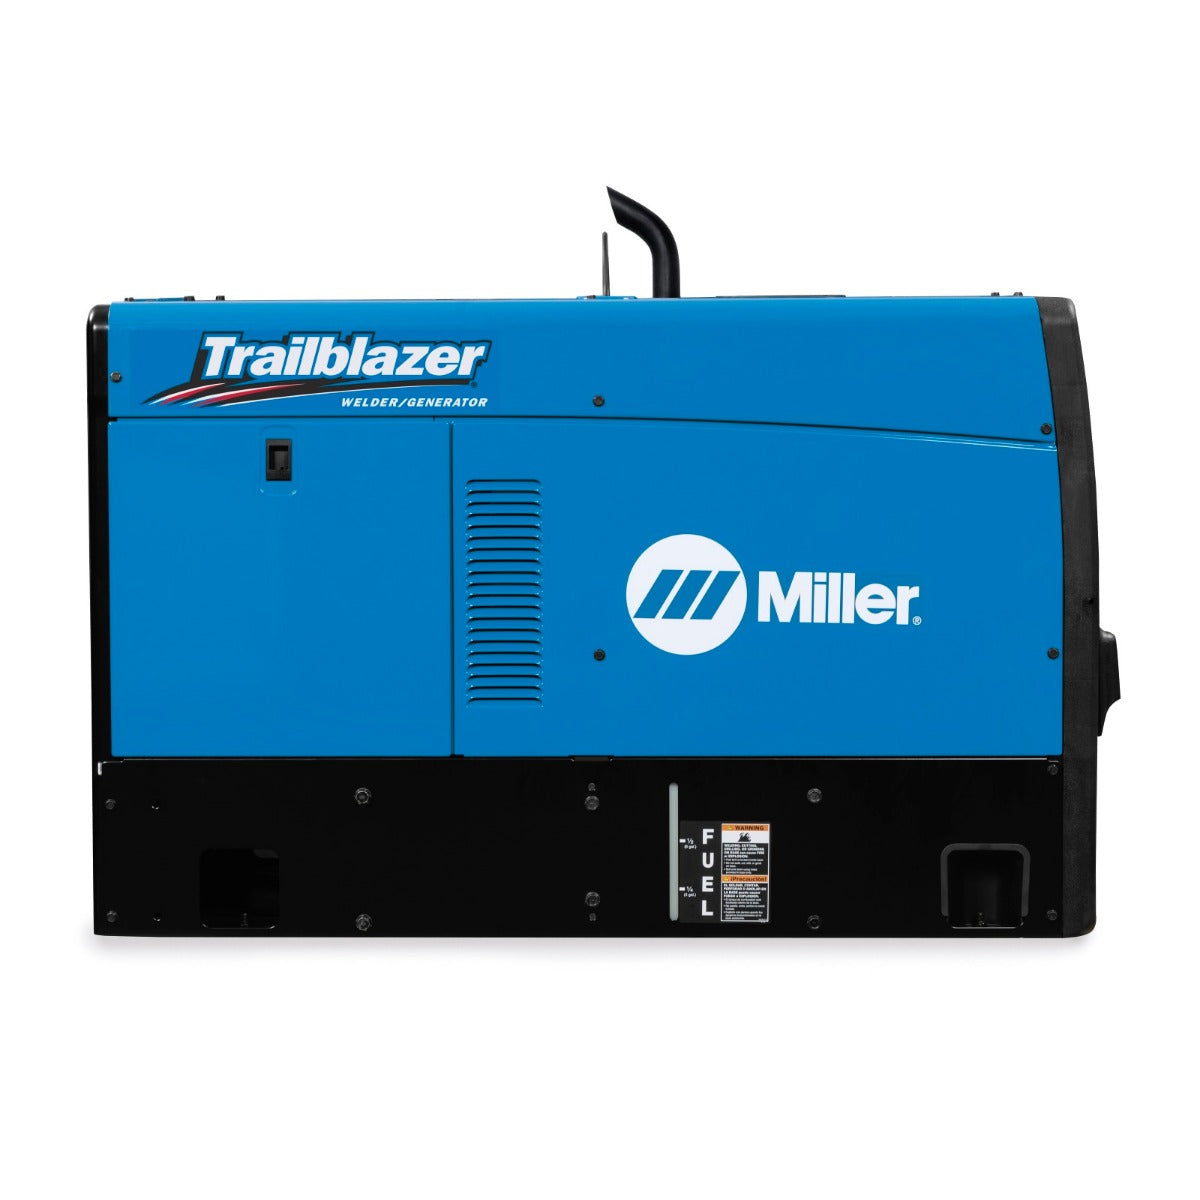 Miller Trailblazer 325 Kubota Diesel Generator w/GFCI and ArcReach (907799001)